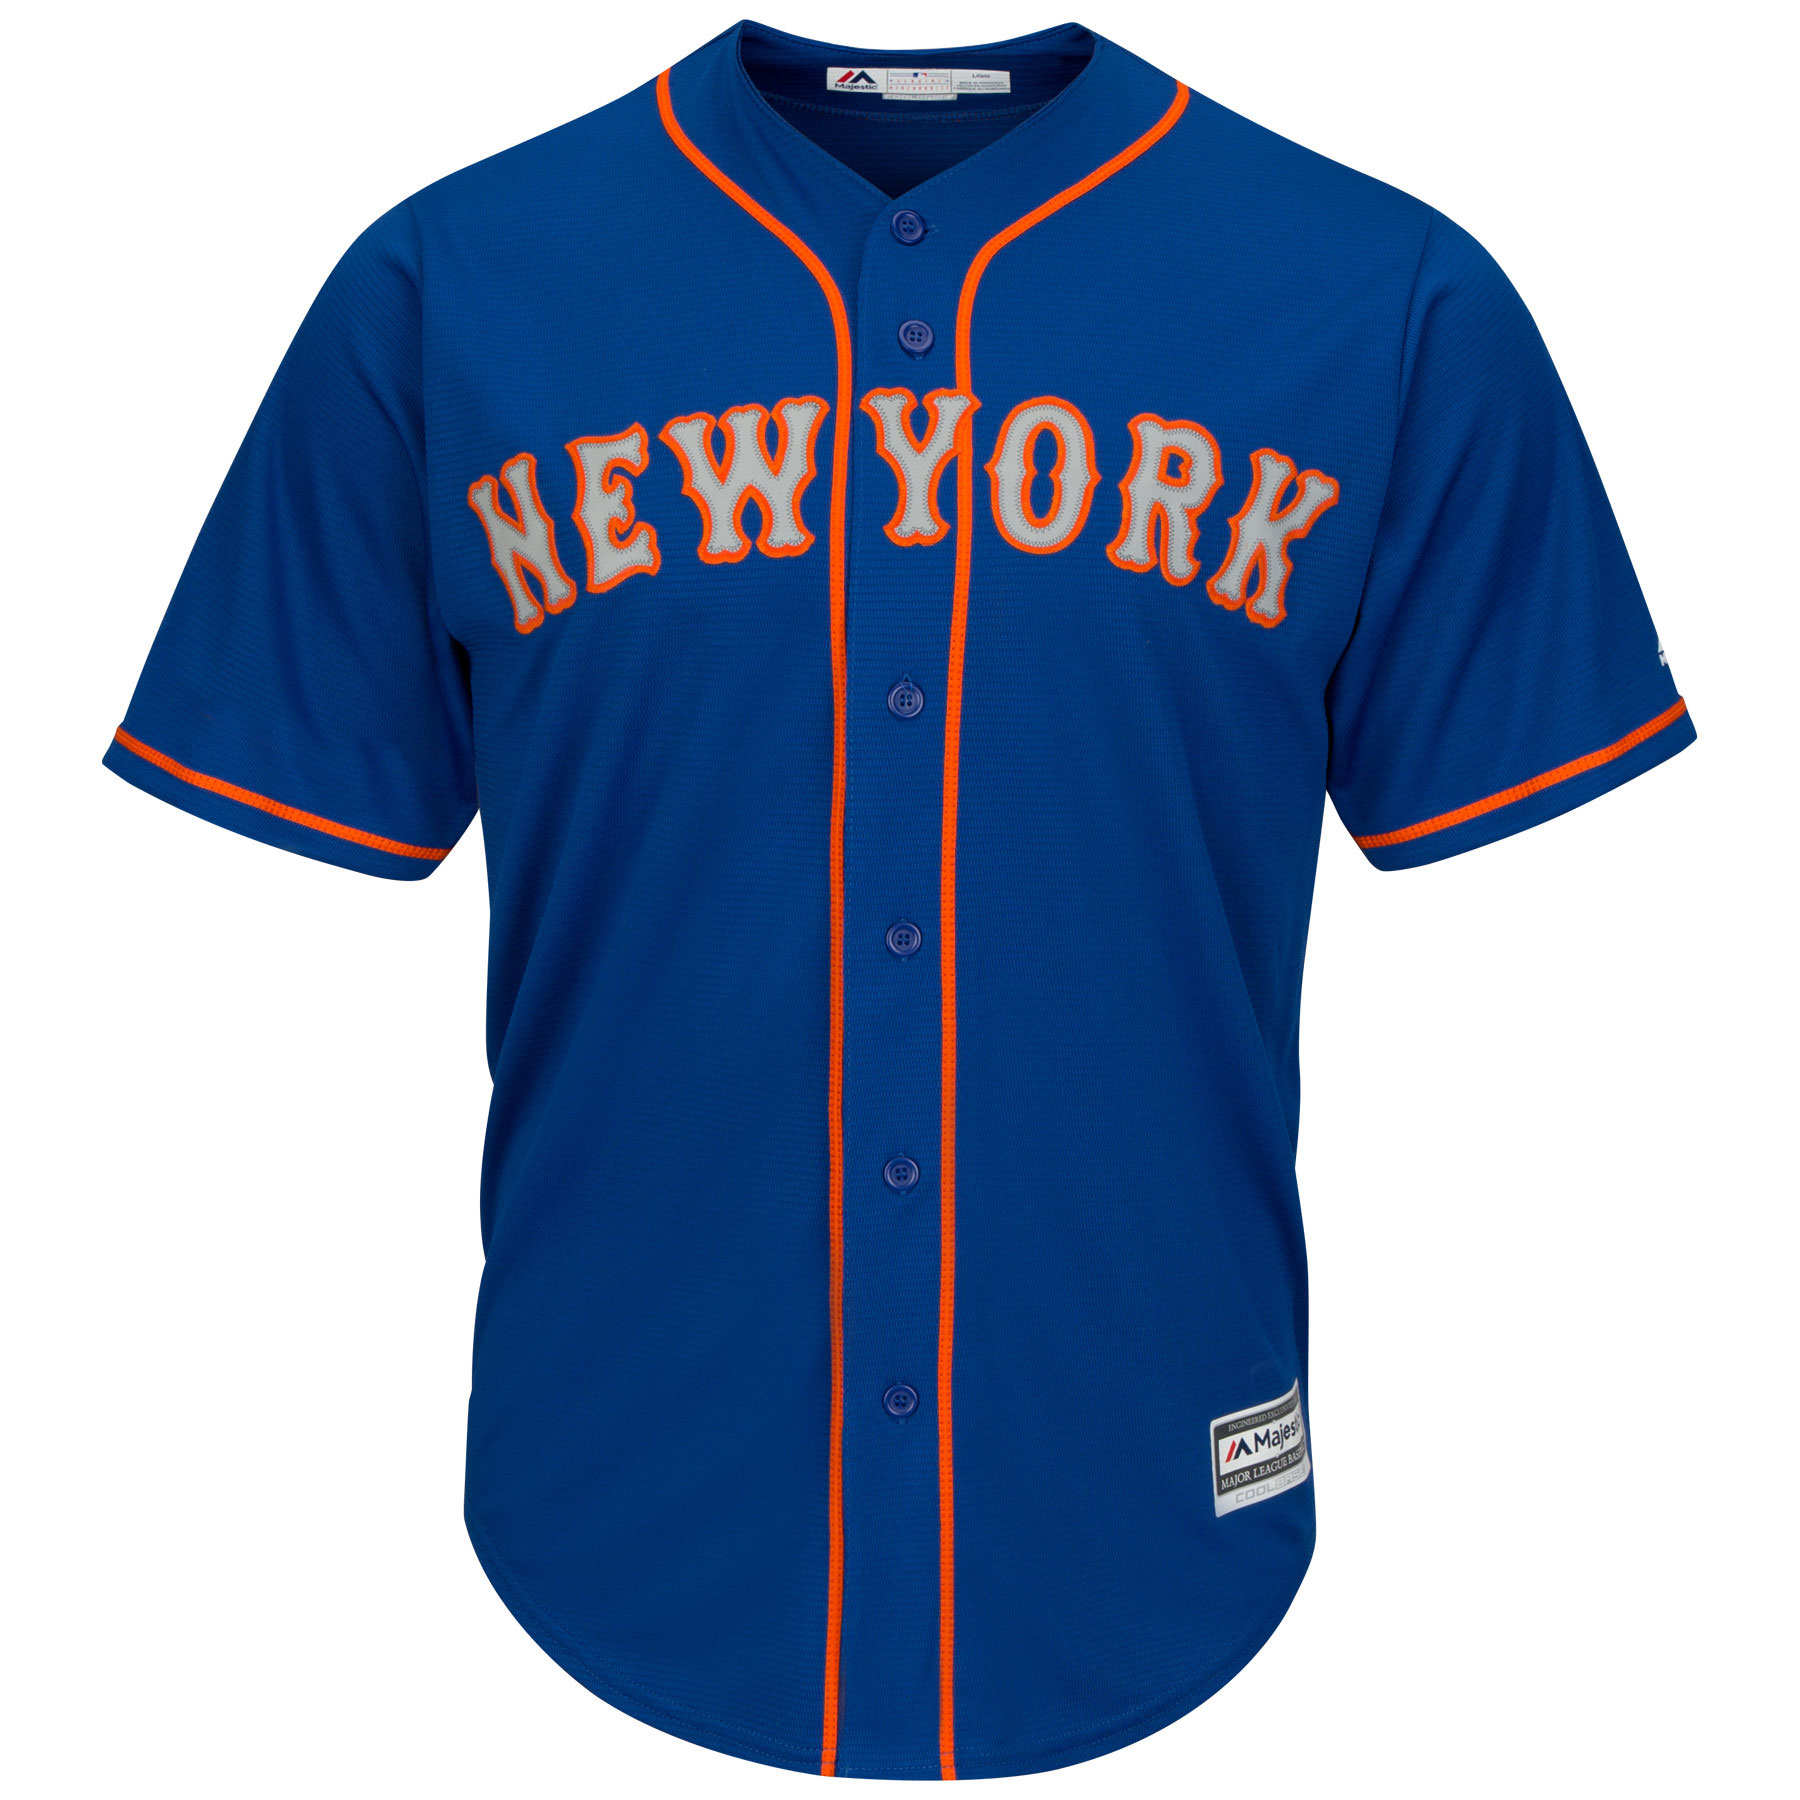 New York Mets 2015 Cool Base Replica Alternate Road MLB Baseball